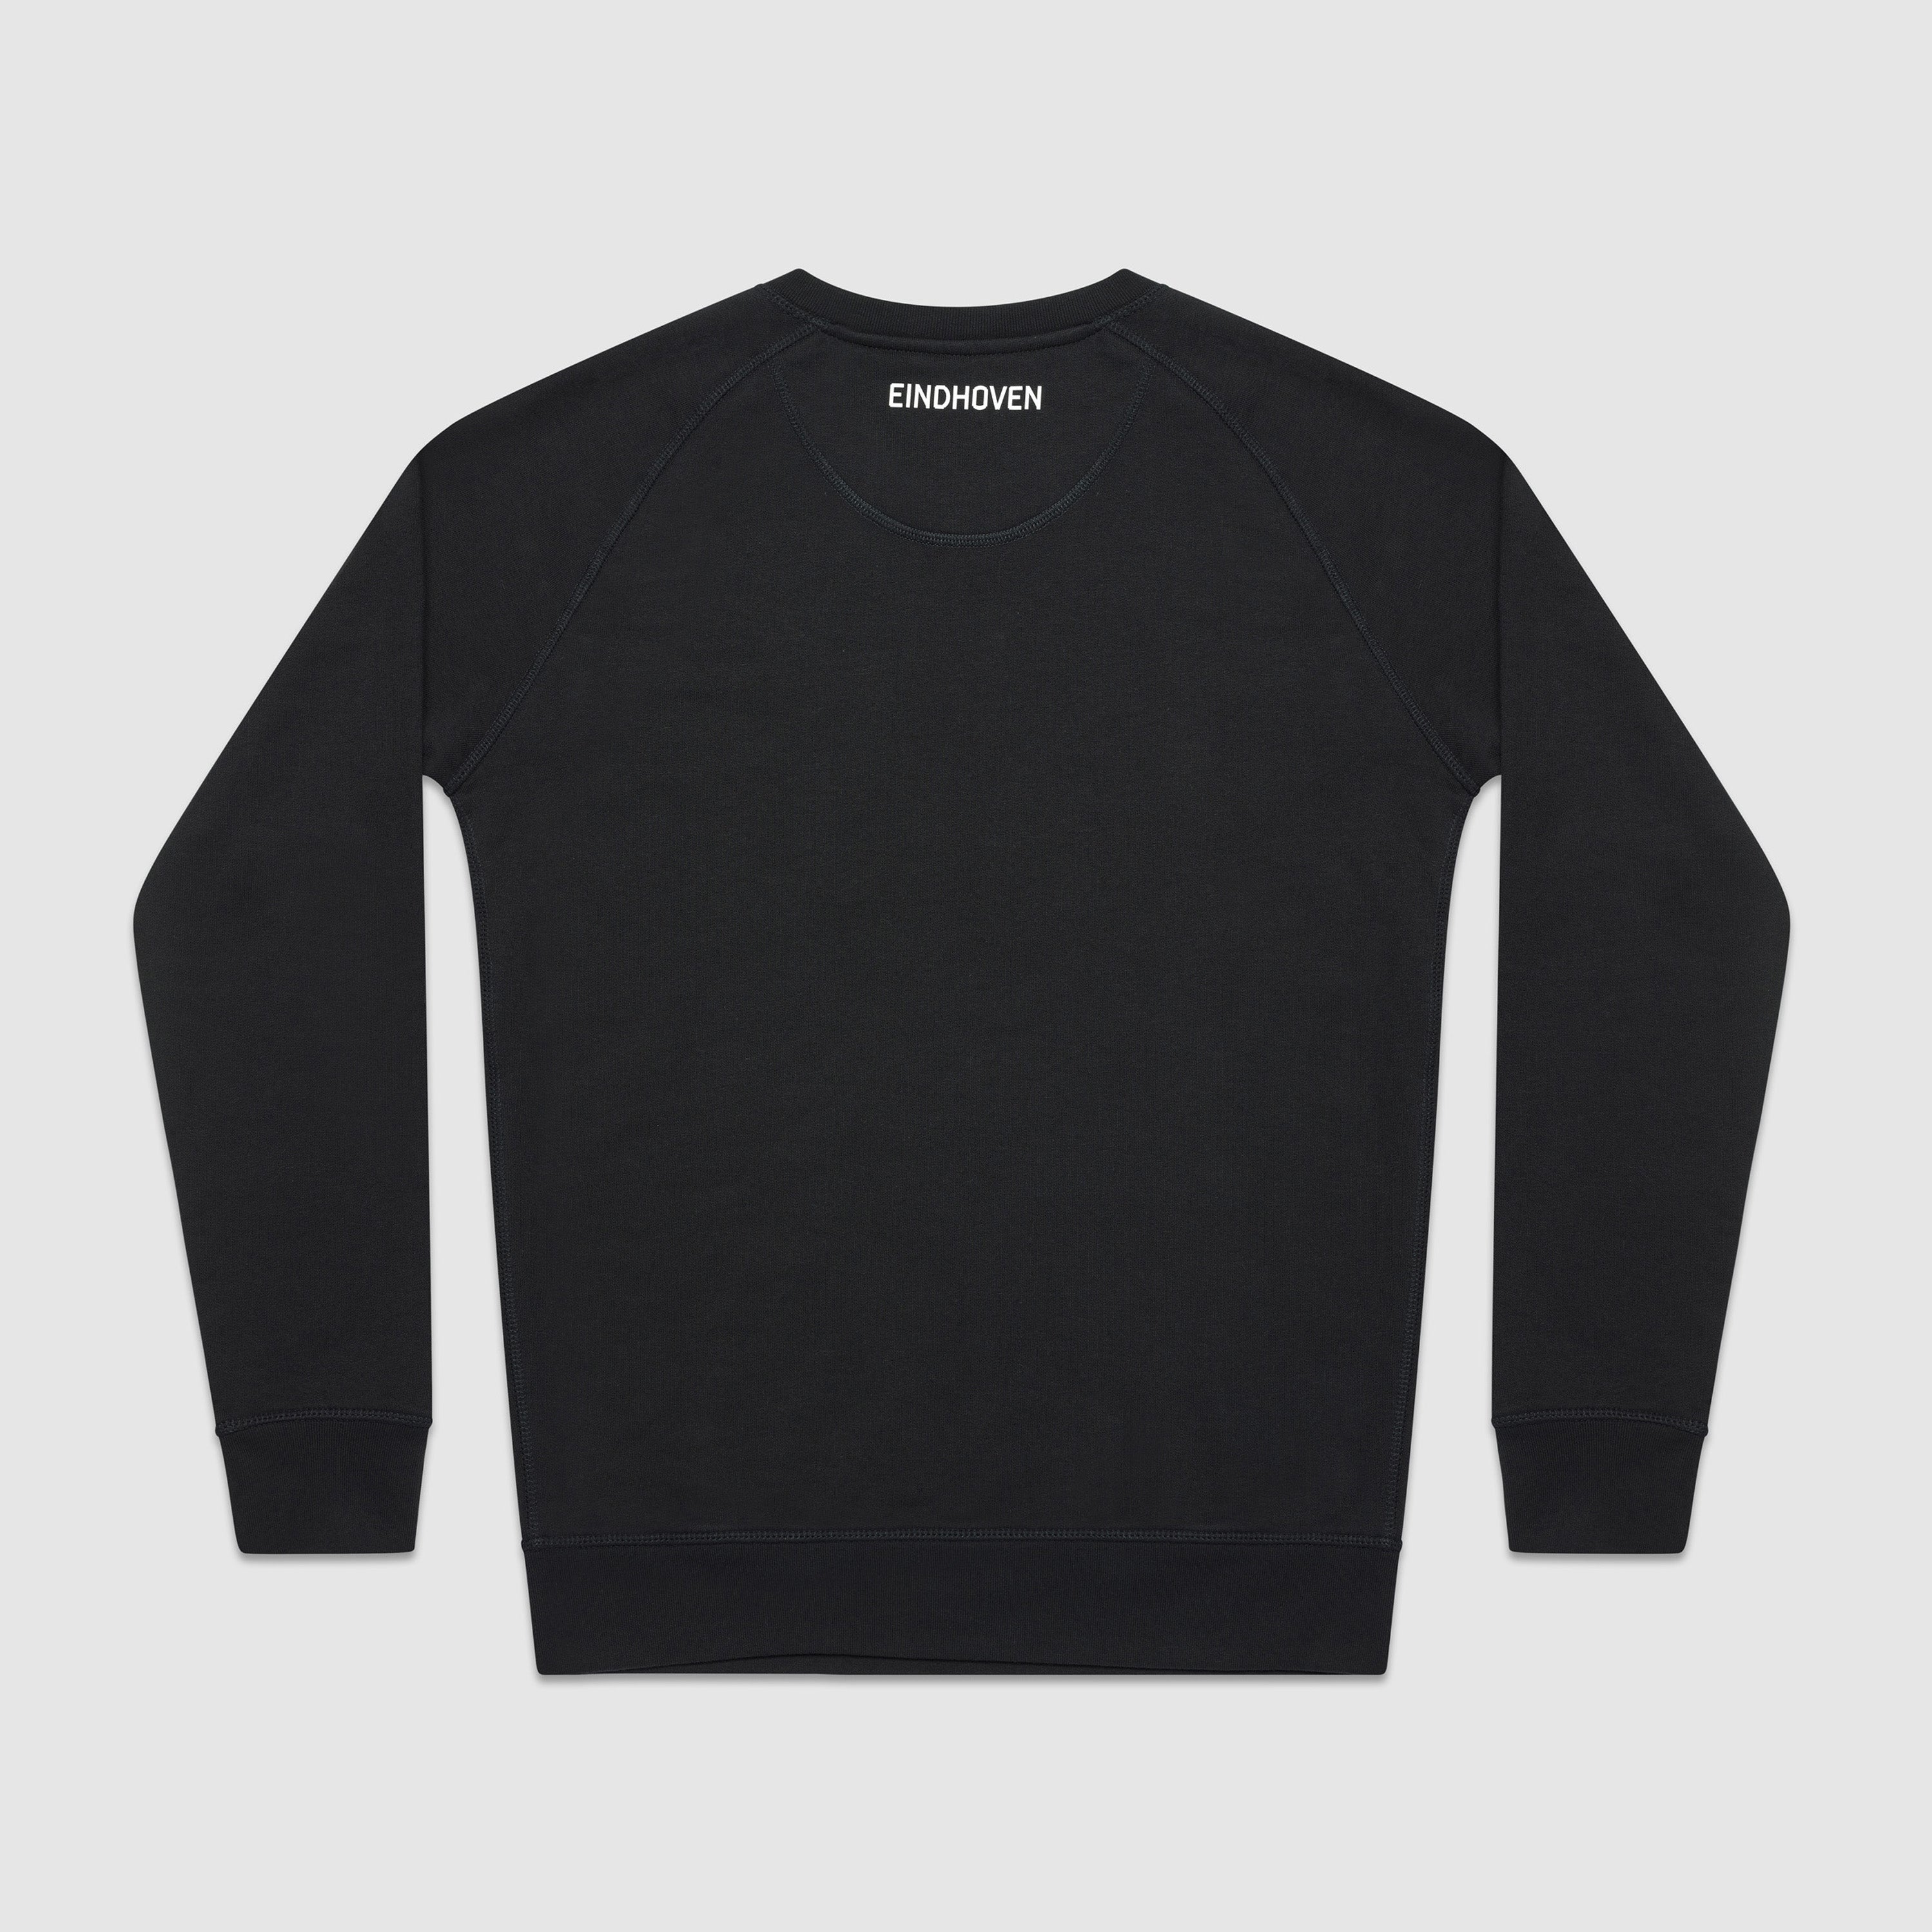 Keiblack Sweater